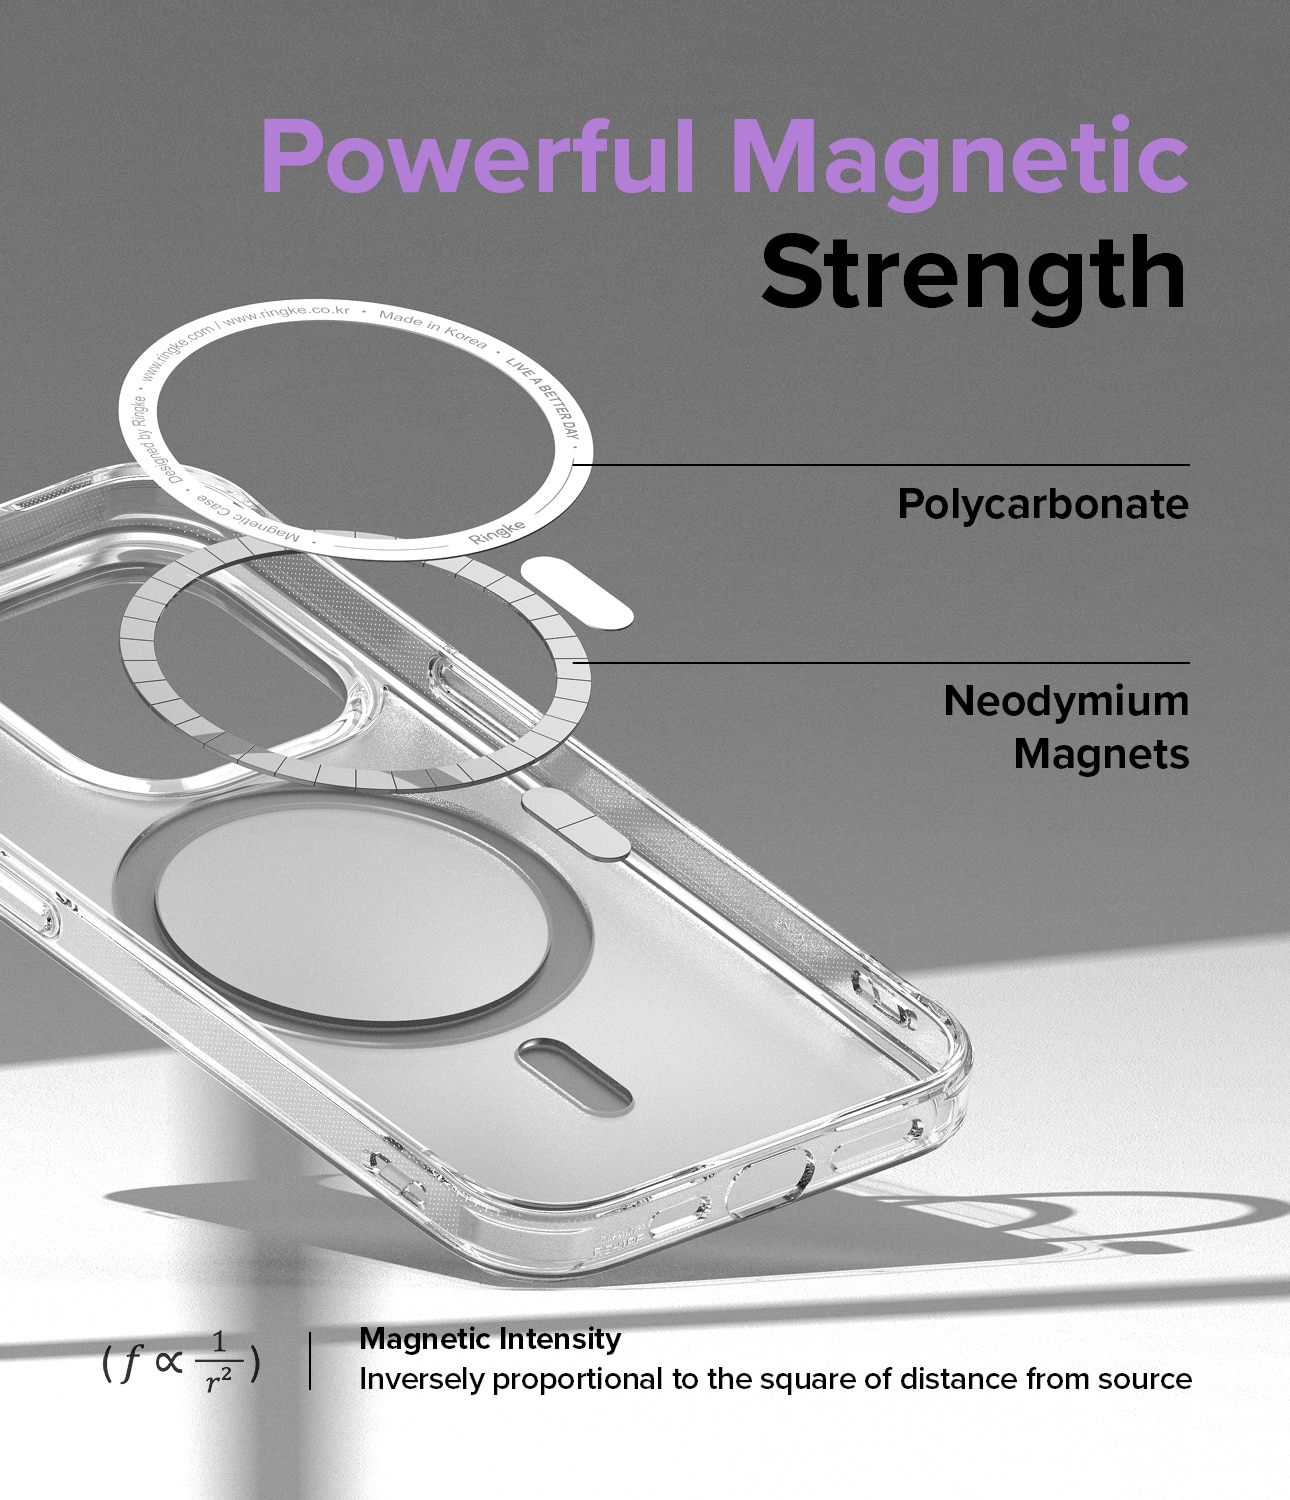 iPhone 14 Pro Max Fusion Magnetic Case Transparent